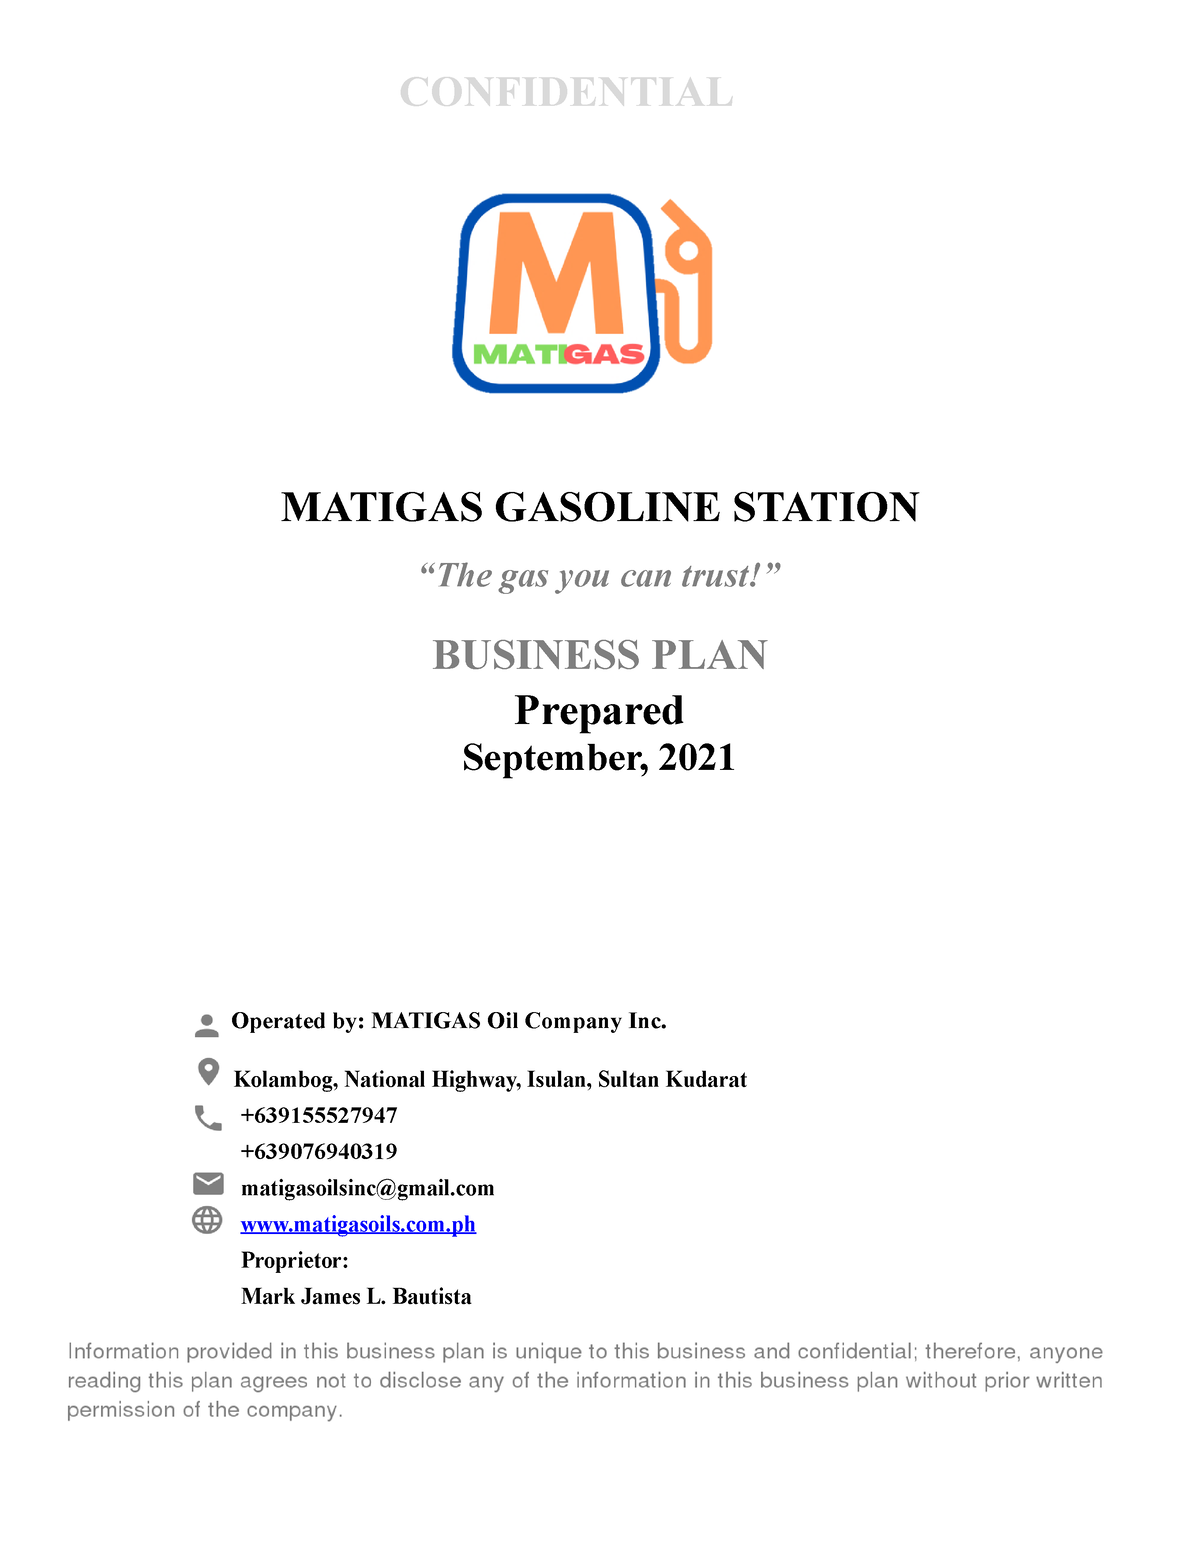 gasoline station business plan